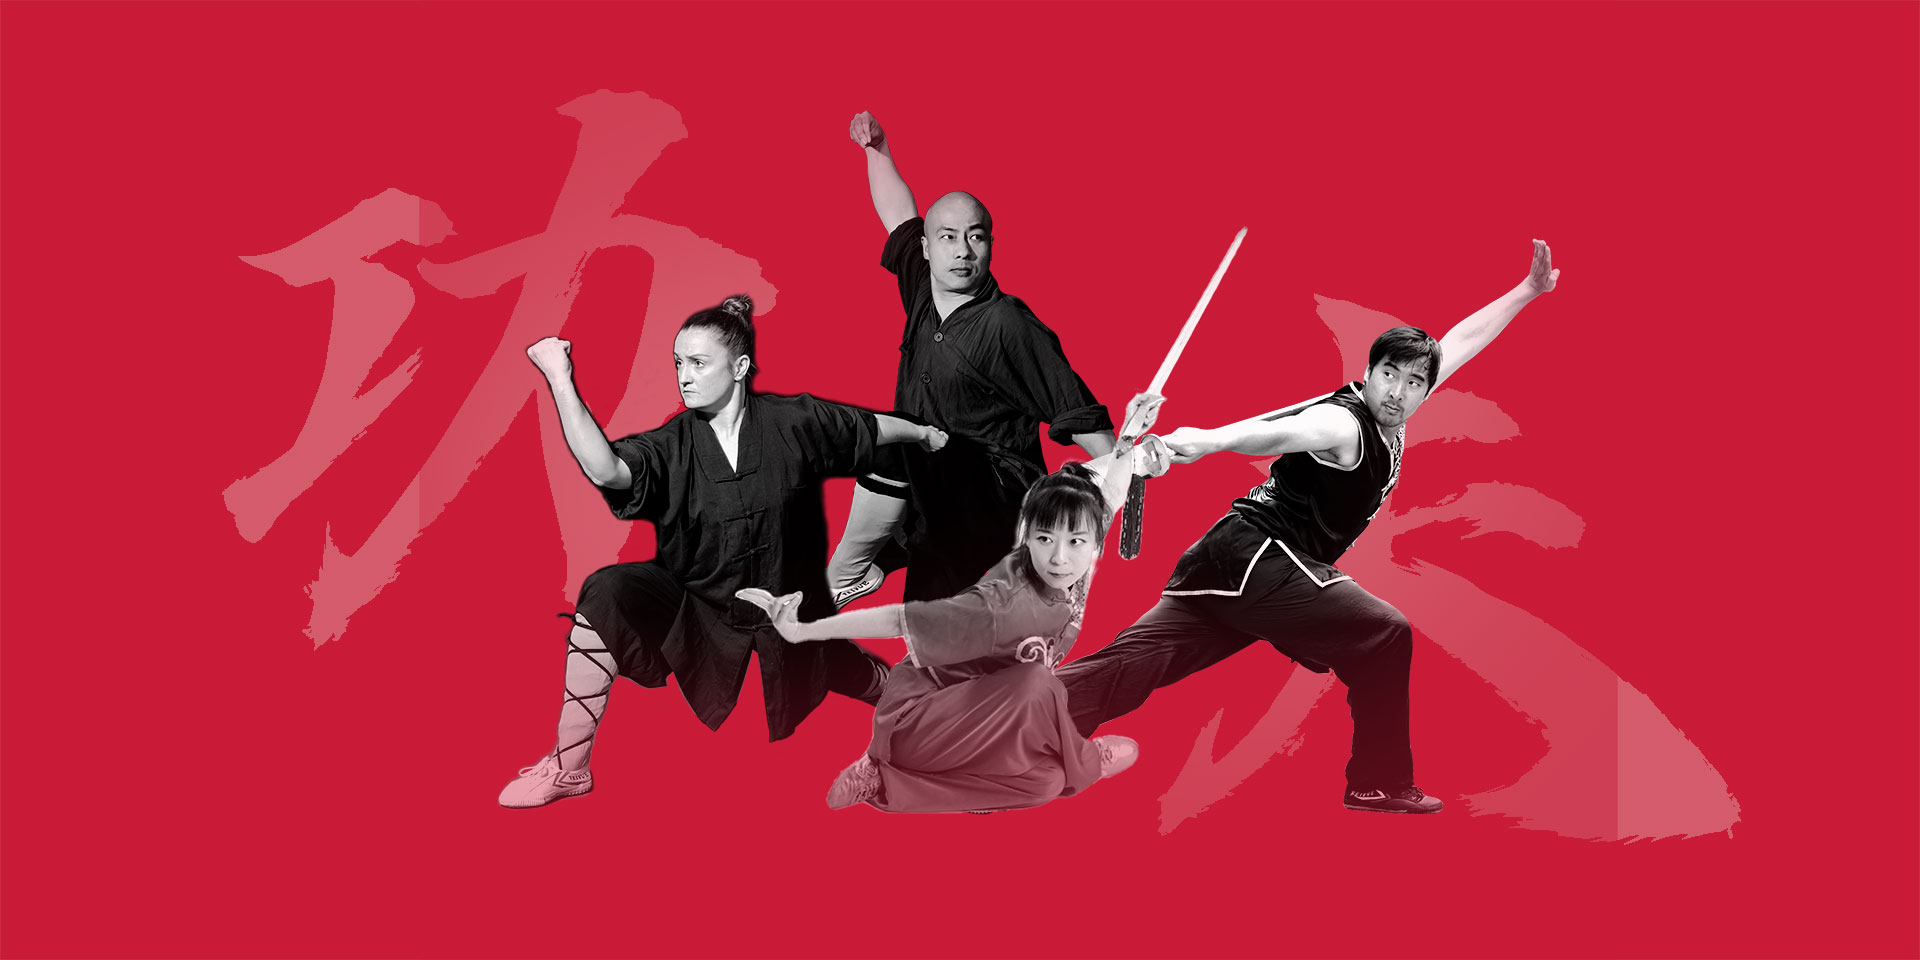 UK Shaolin Martial Arts